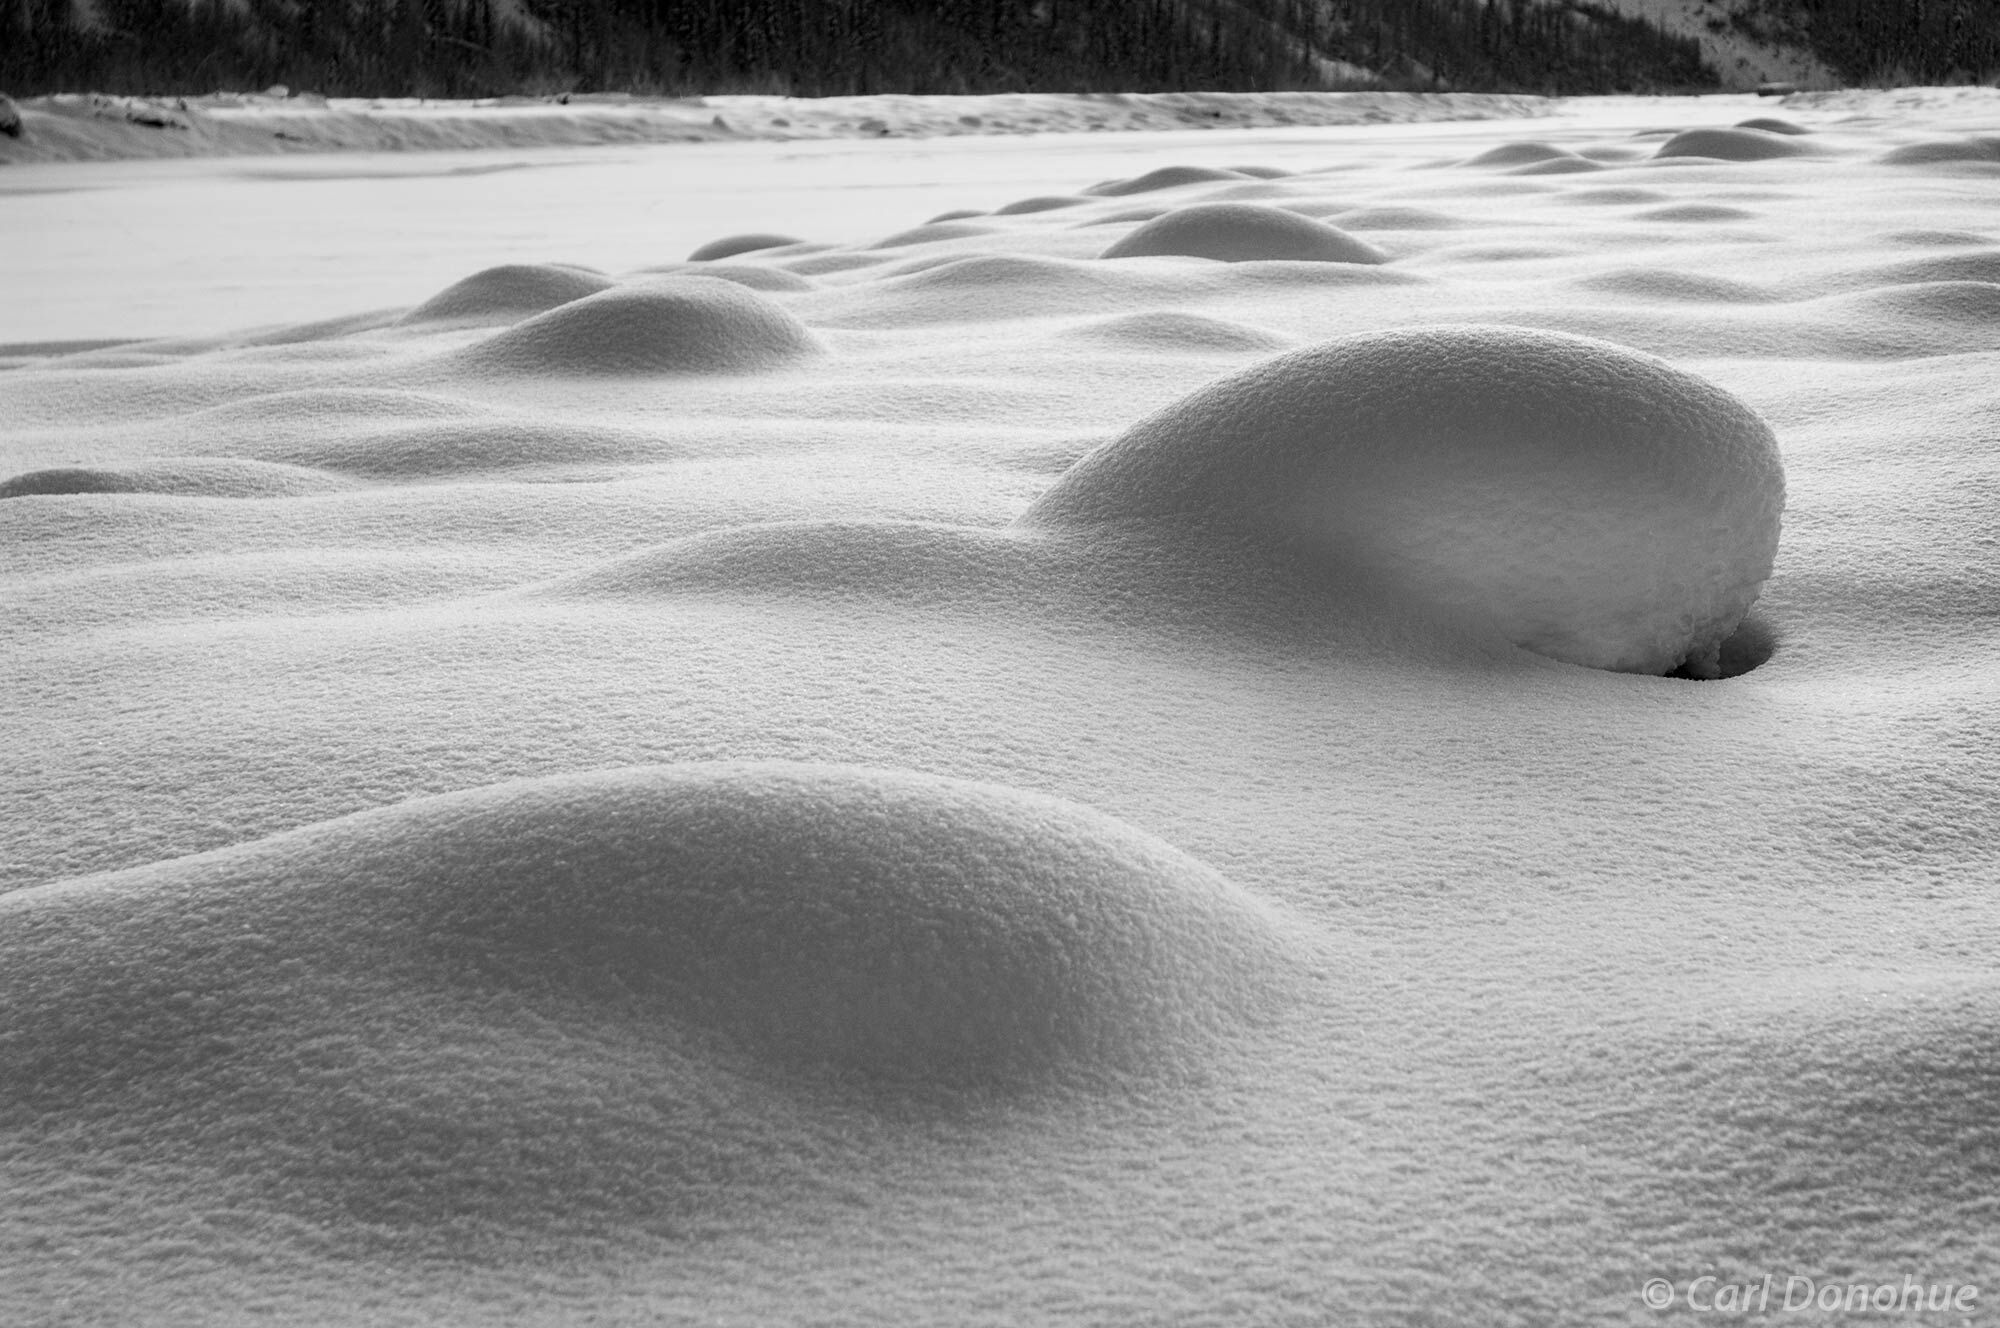 Snow covered boulders glisten in late evening sun. Winter light on fresh snow, along the frozen Kennicott River, or Kennecott...